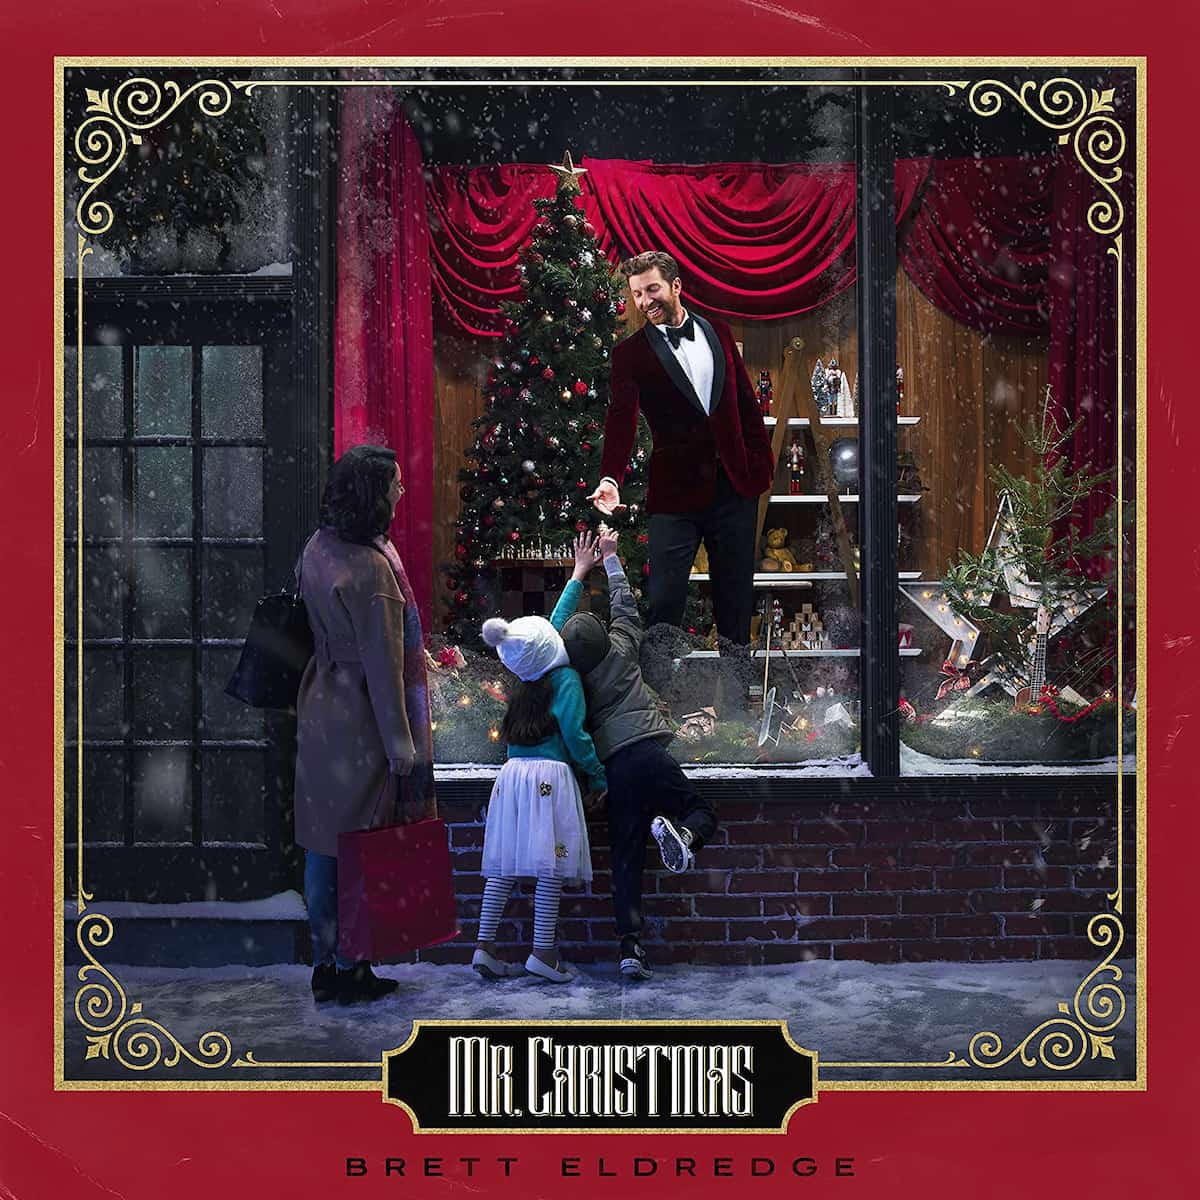 Brett Eldredge Weihnachts-CD "Mr. Christmas" 2021